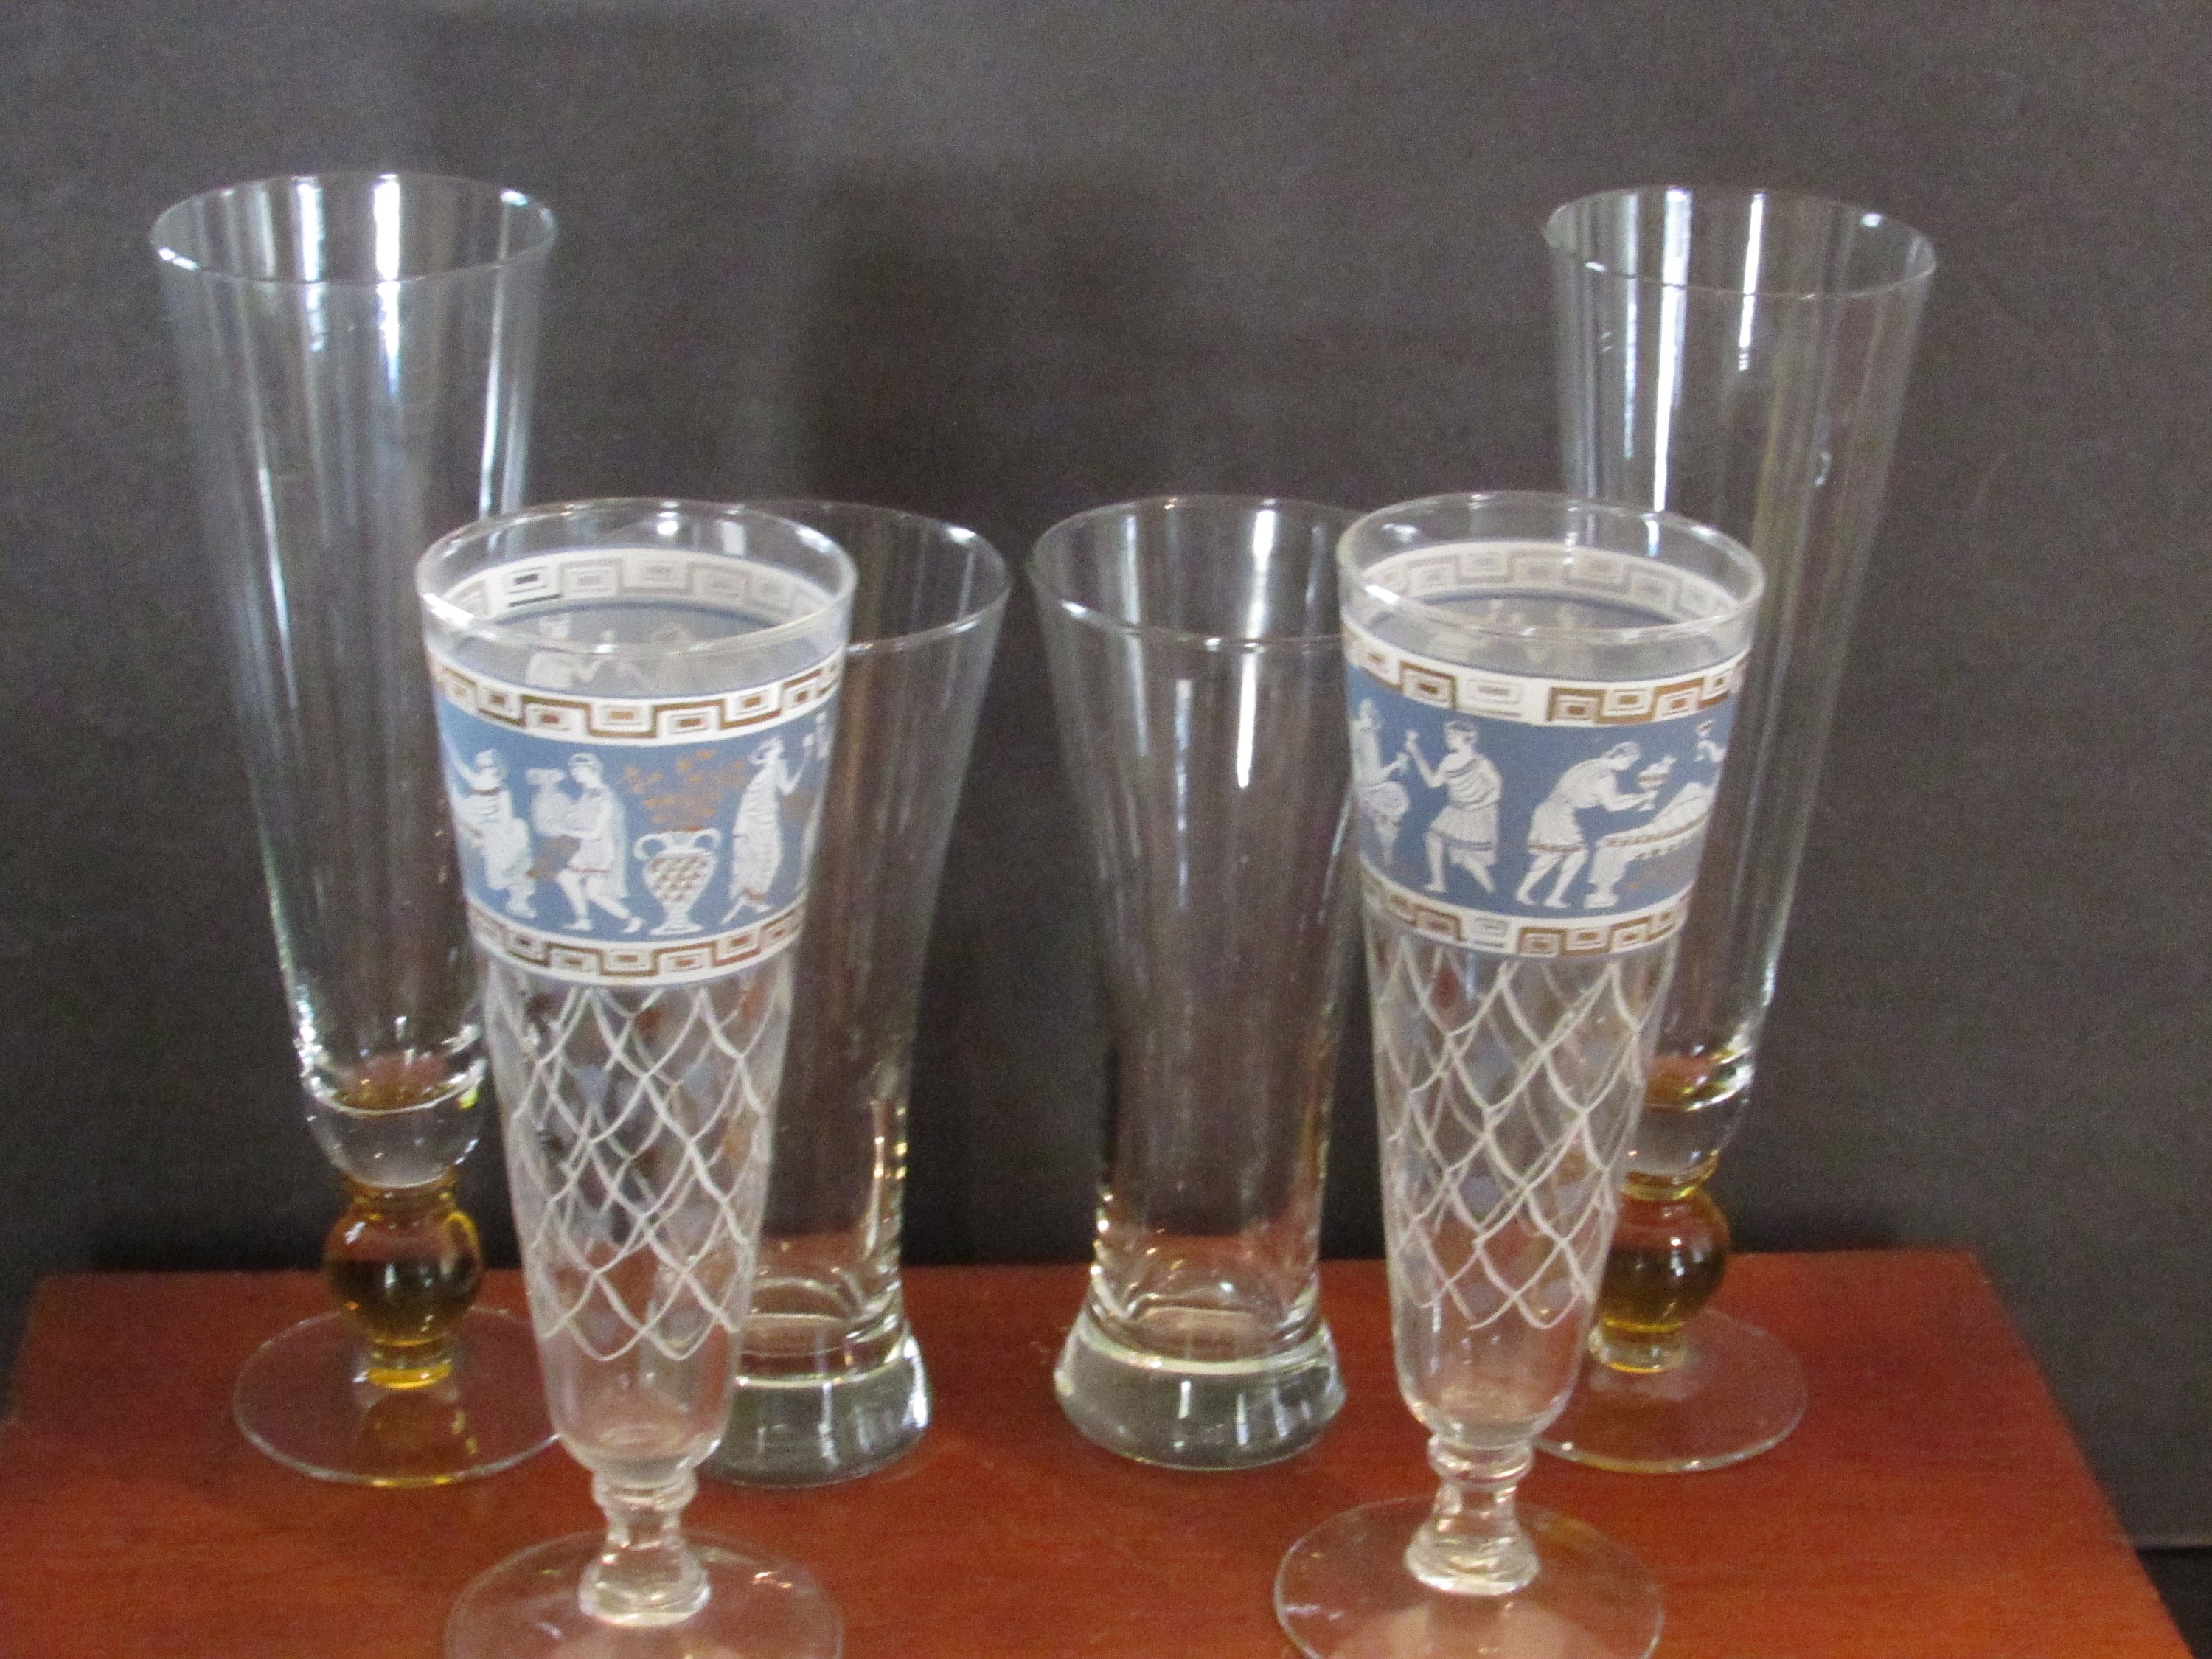 Premium Pilsner 1925 oz Beer Glasses Set of 4 Pint Glasses by Glavers, Tall Designed European Glass Tumbler Cups for Bar, Cocktails, Beer, Soda, Juice